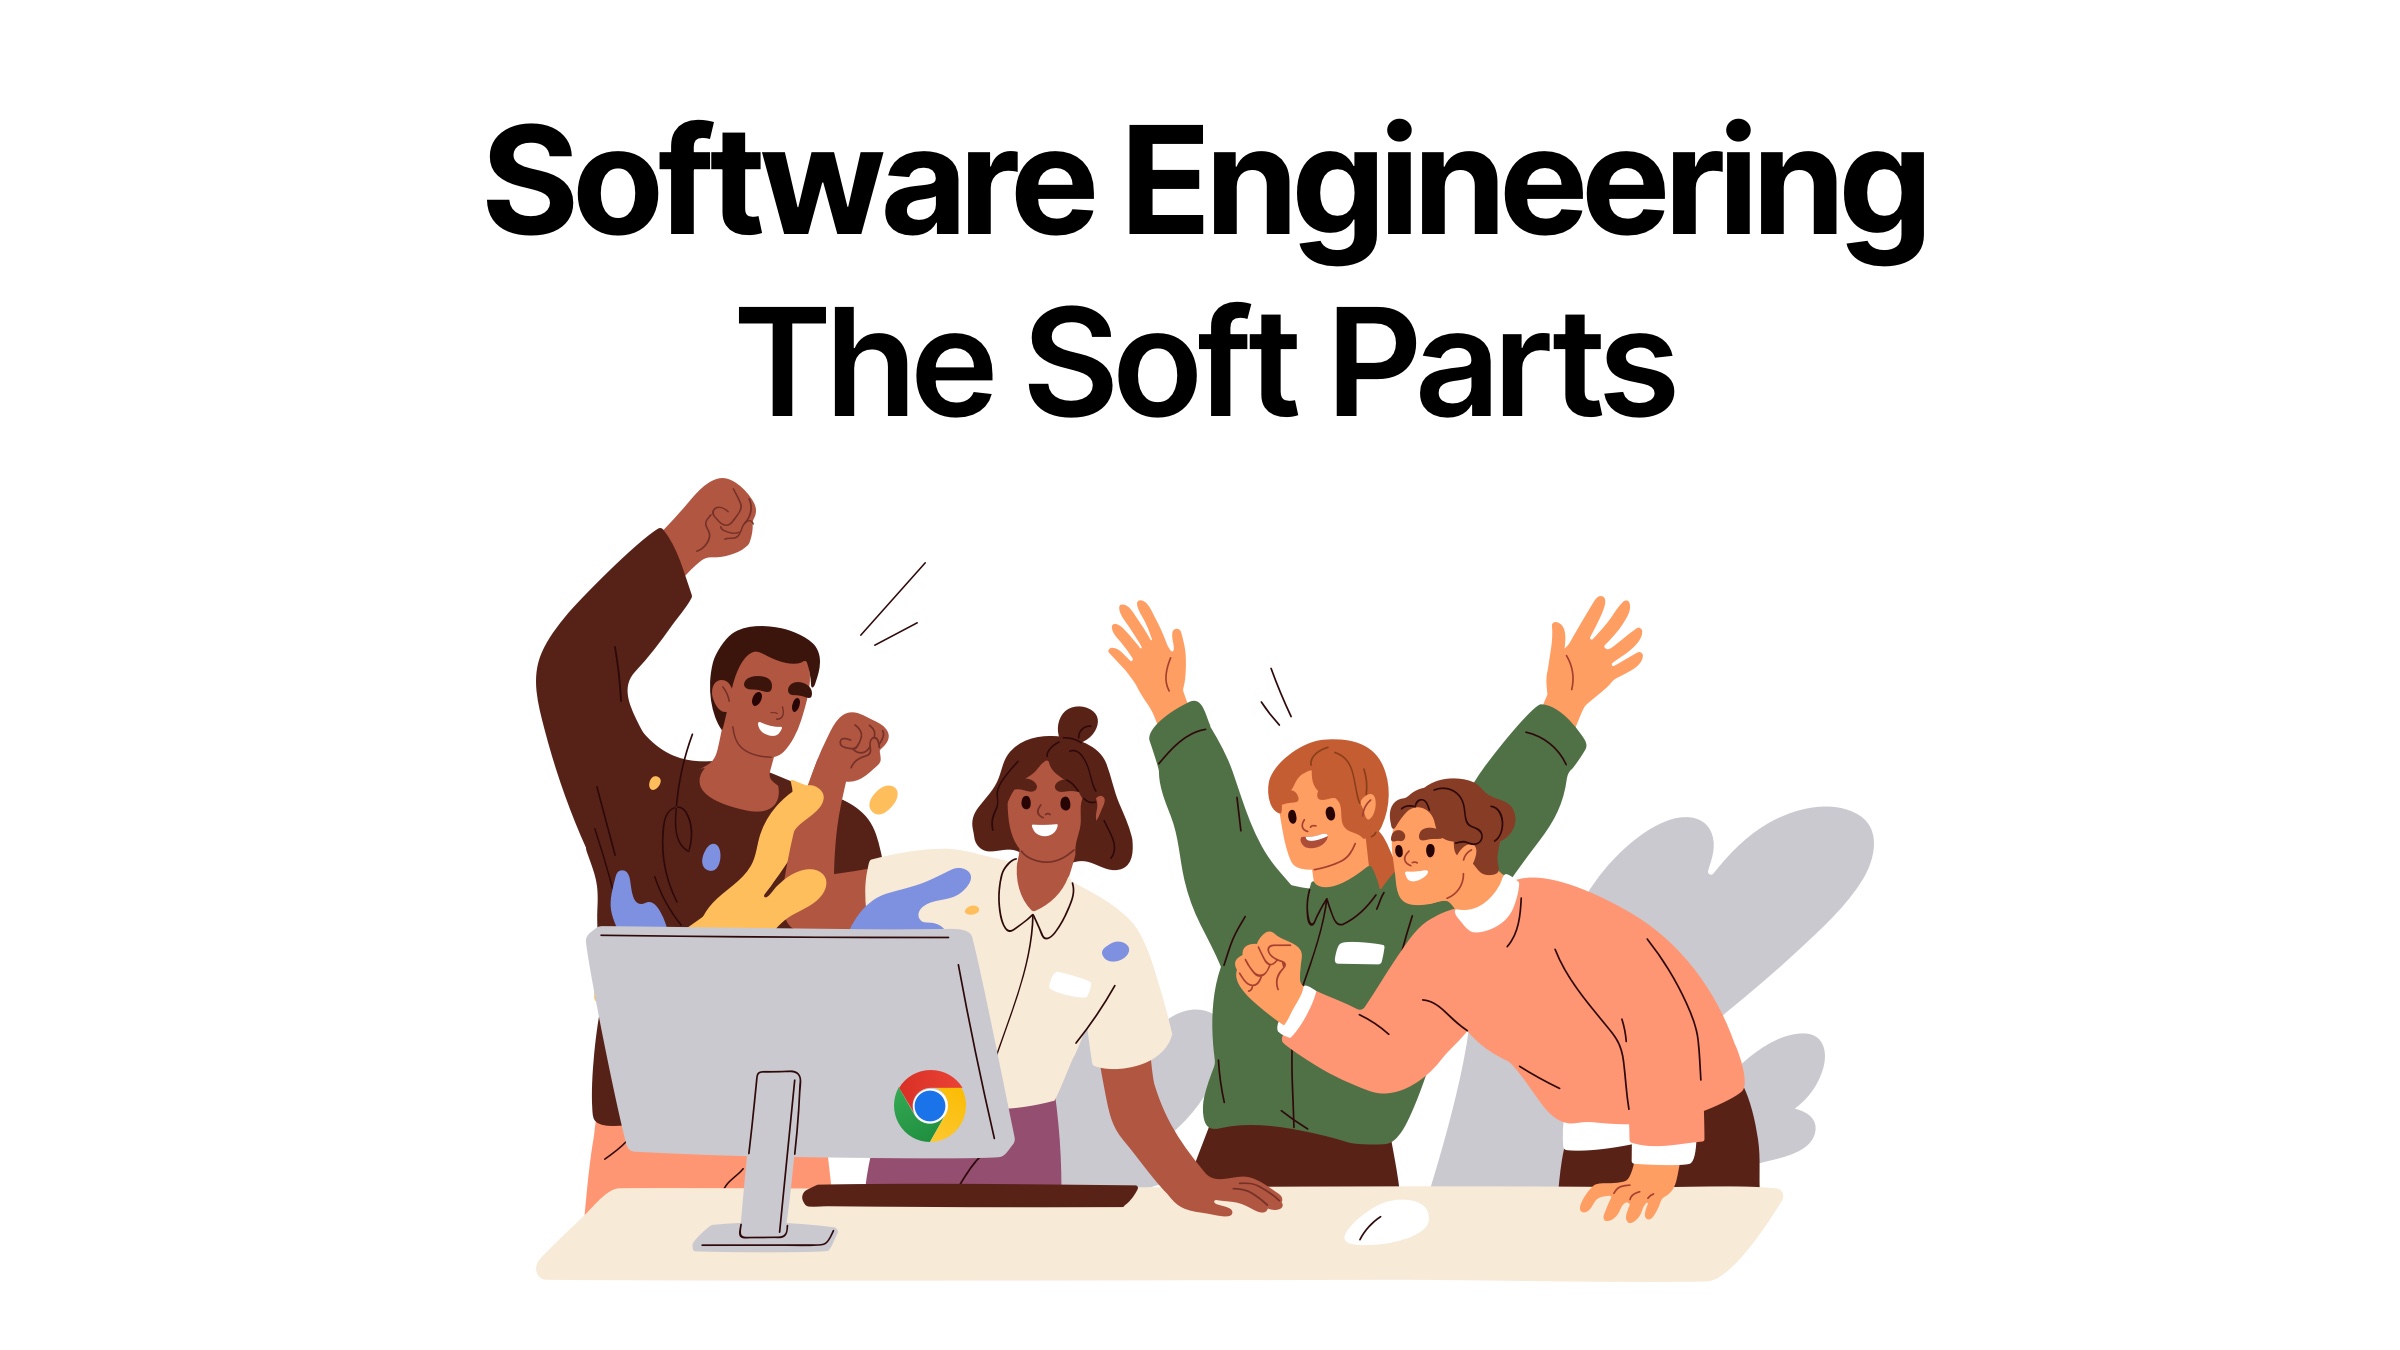 https://addyosmani.com/blog/software-engineering-soft-parts